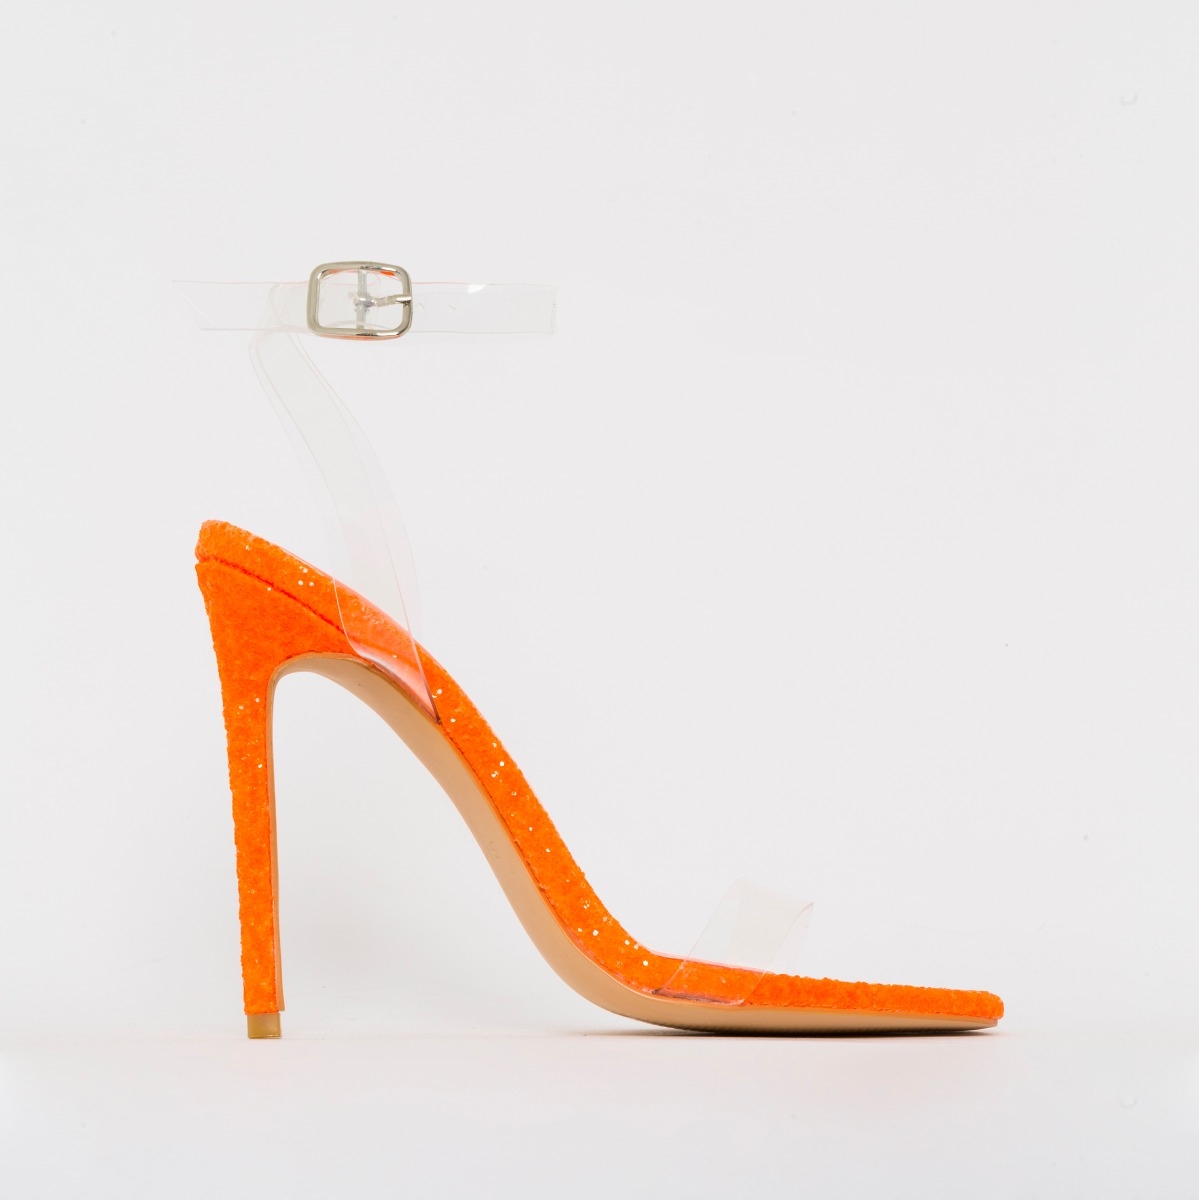 Fun Orange Heels - Shop on Pinterest